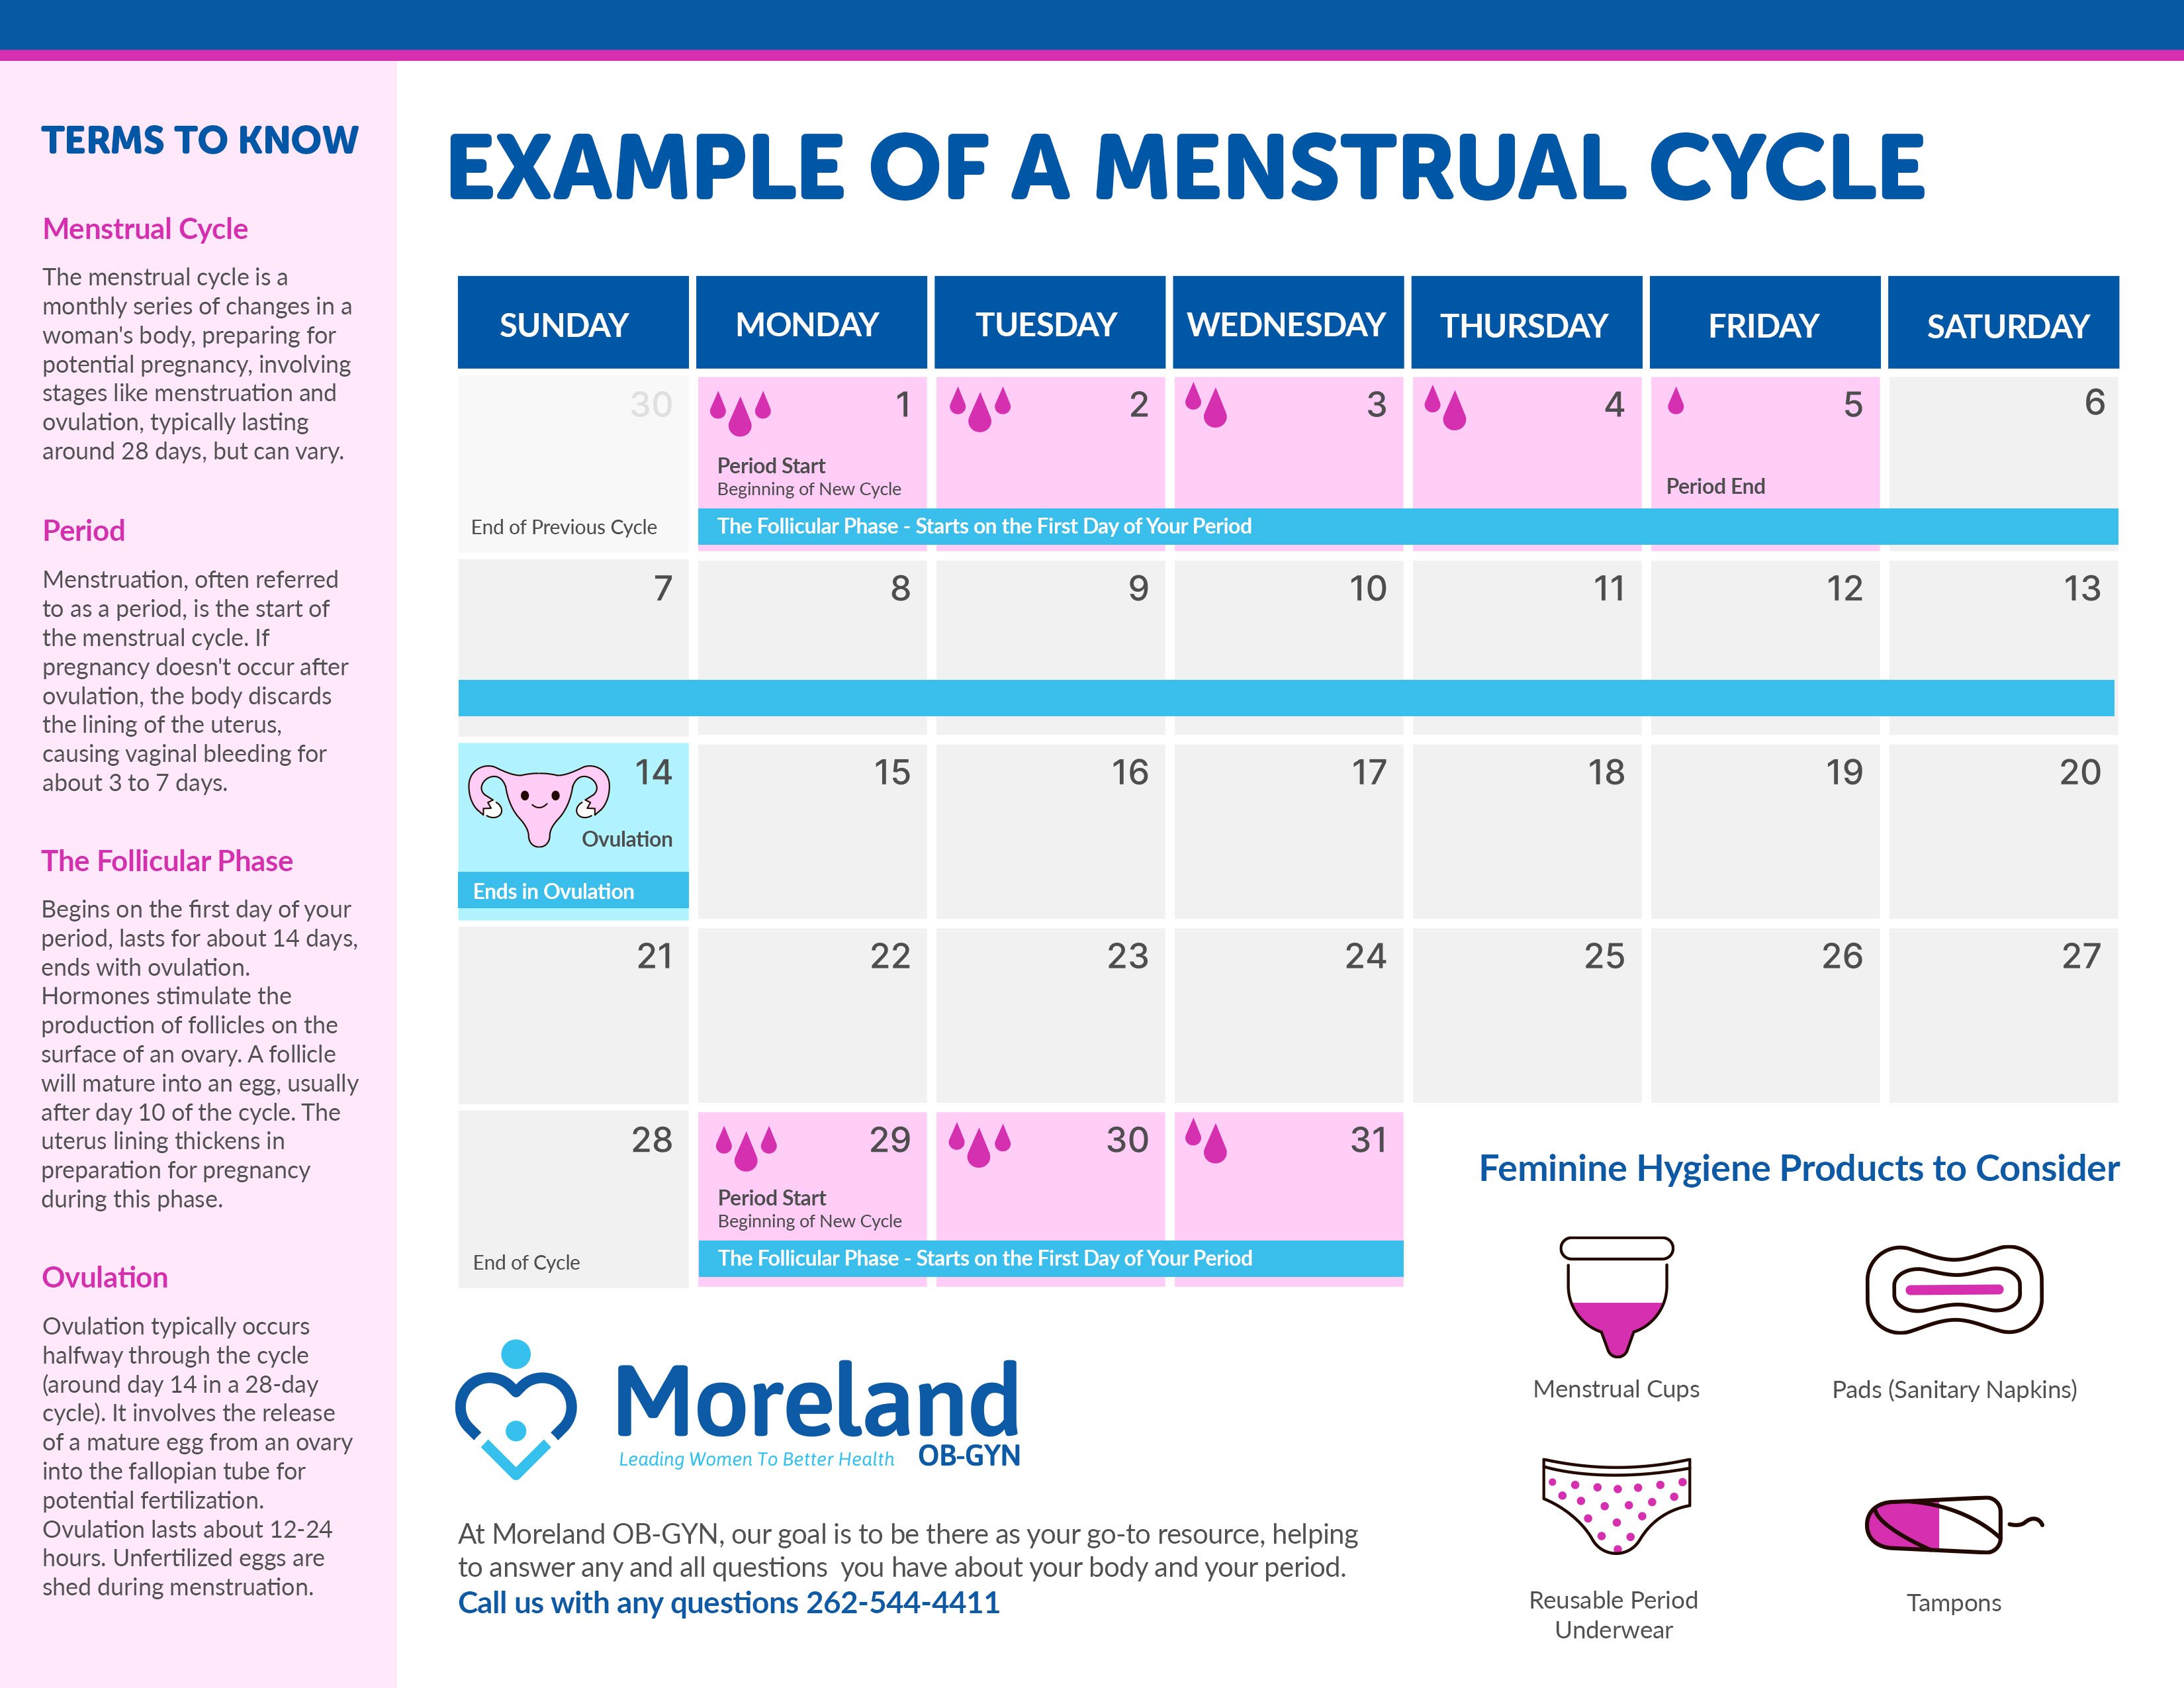 https://www.morelandobgyn.com/hs-fs/hubfs/Menstrual-Cycle-v2.jpg?width=3300&height=2550&name=Menstrual-Cycle-v2.jpg